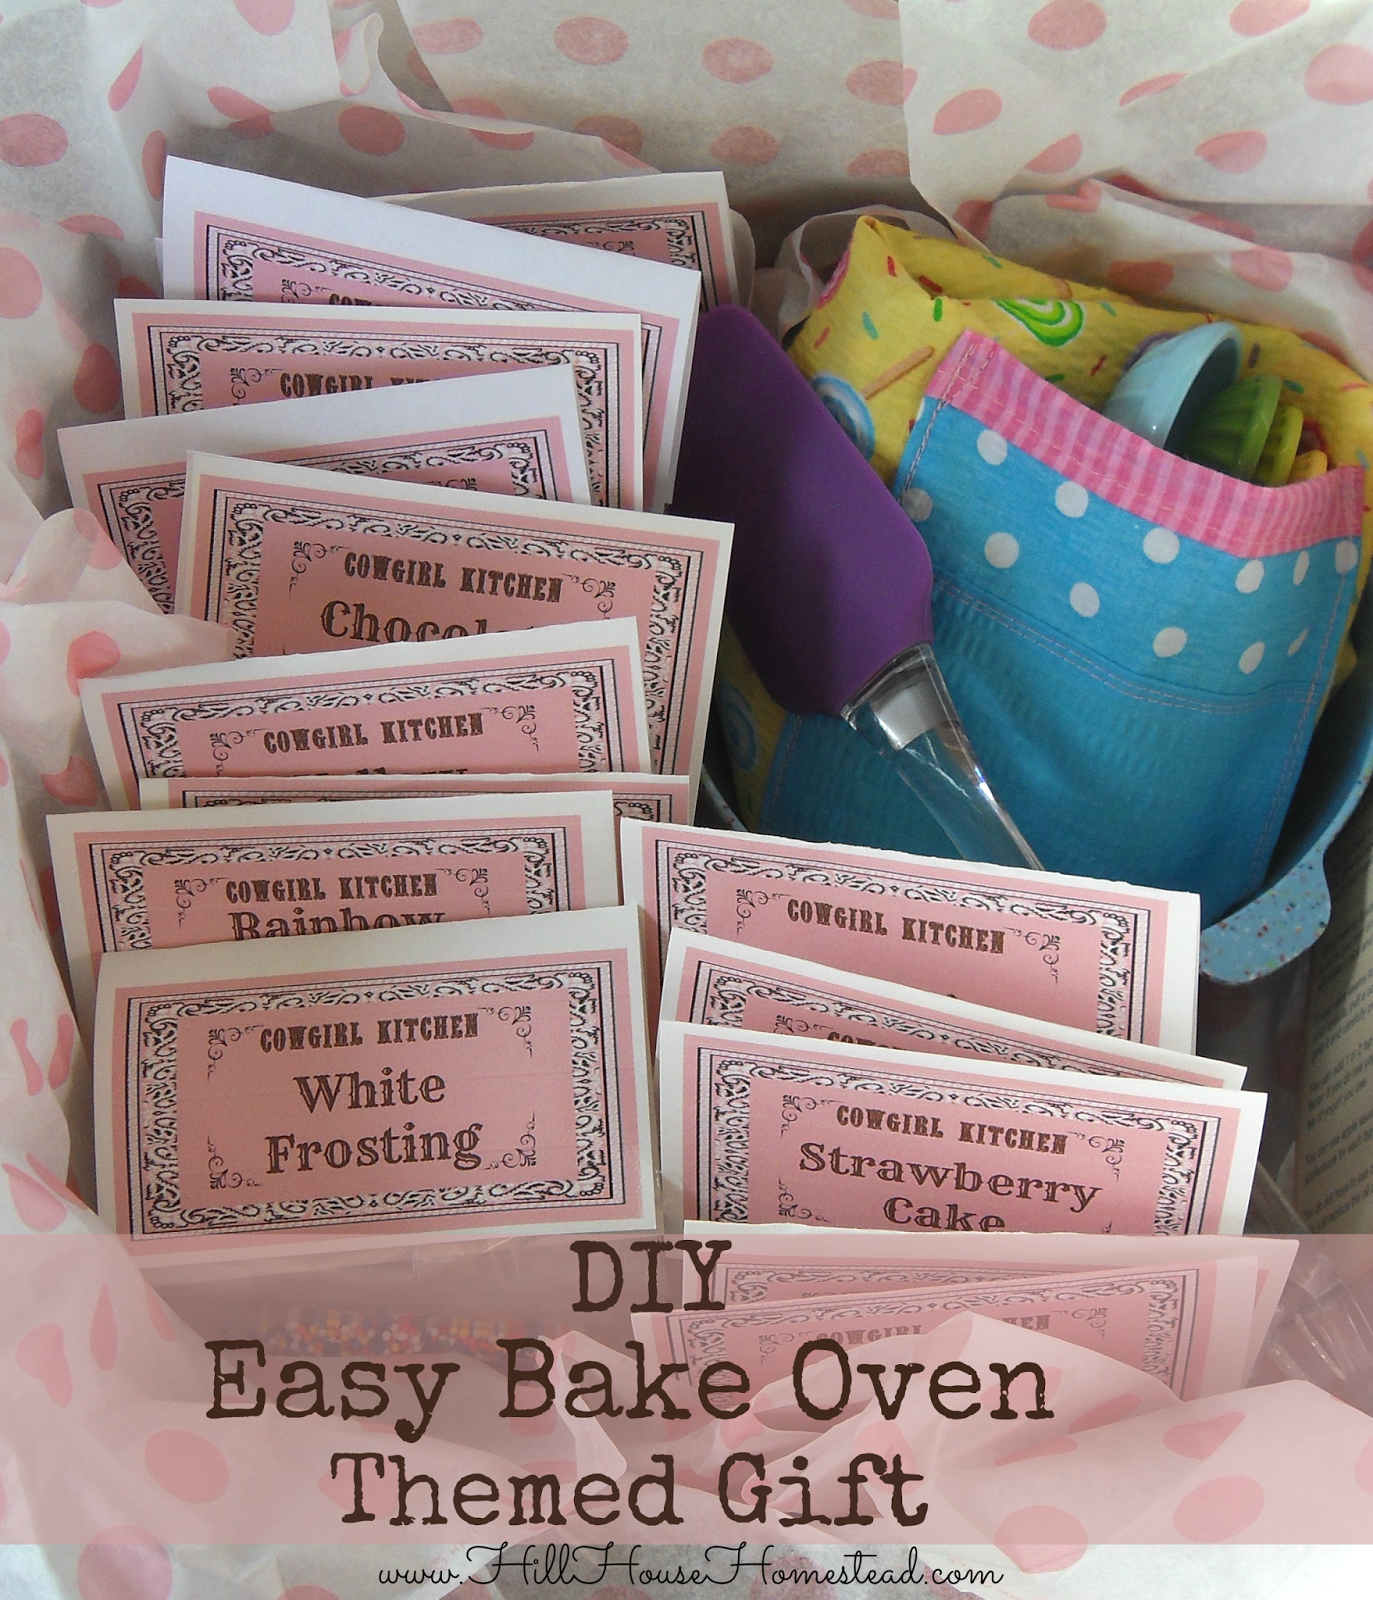 http://3.bp.blogspot.com/-A3ixXWcmED4/U0CBMe9CrUI/AAAAAAAAAW4/2h0dCb4qIhM/s1600/Easy+Bake+Oven+Themed+Gift.png